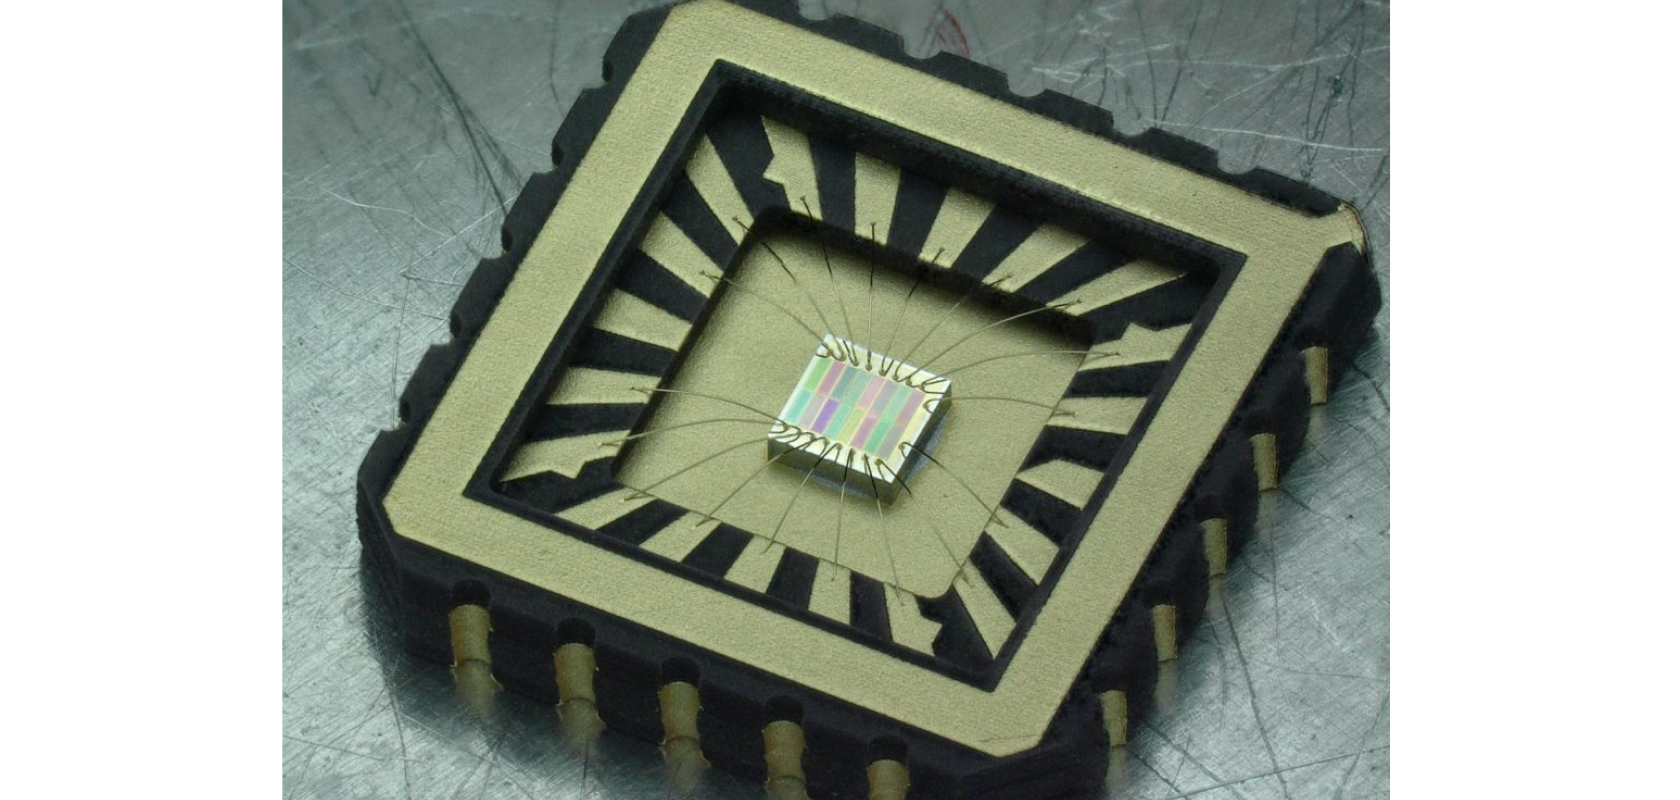 MantiSpectra's spectral sensor